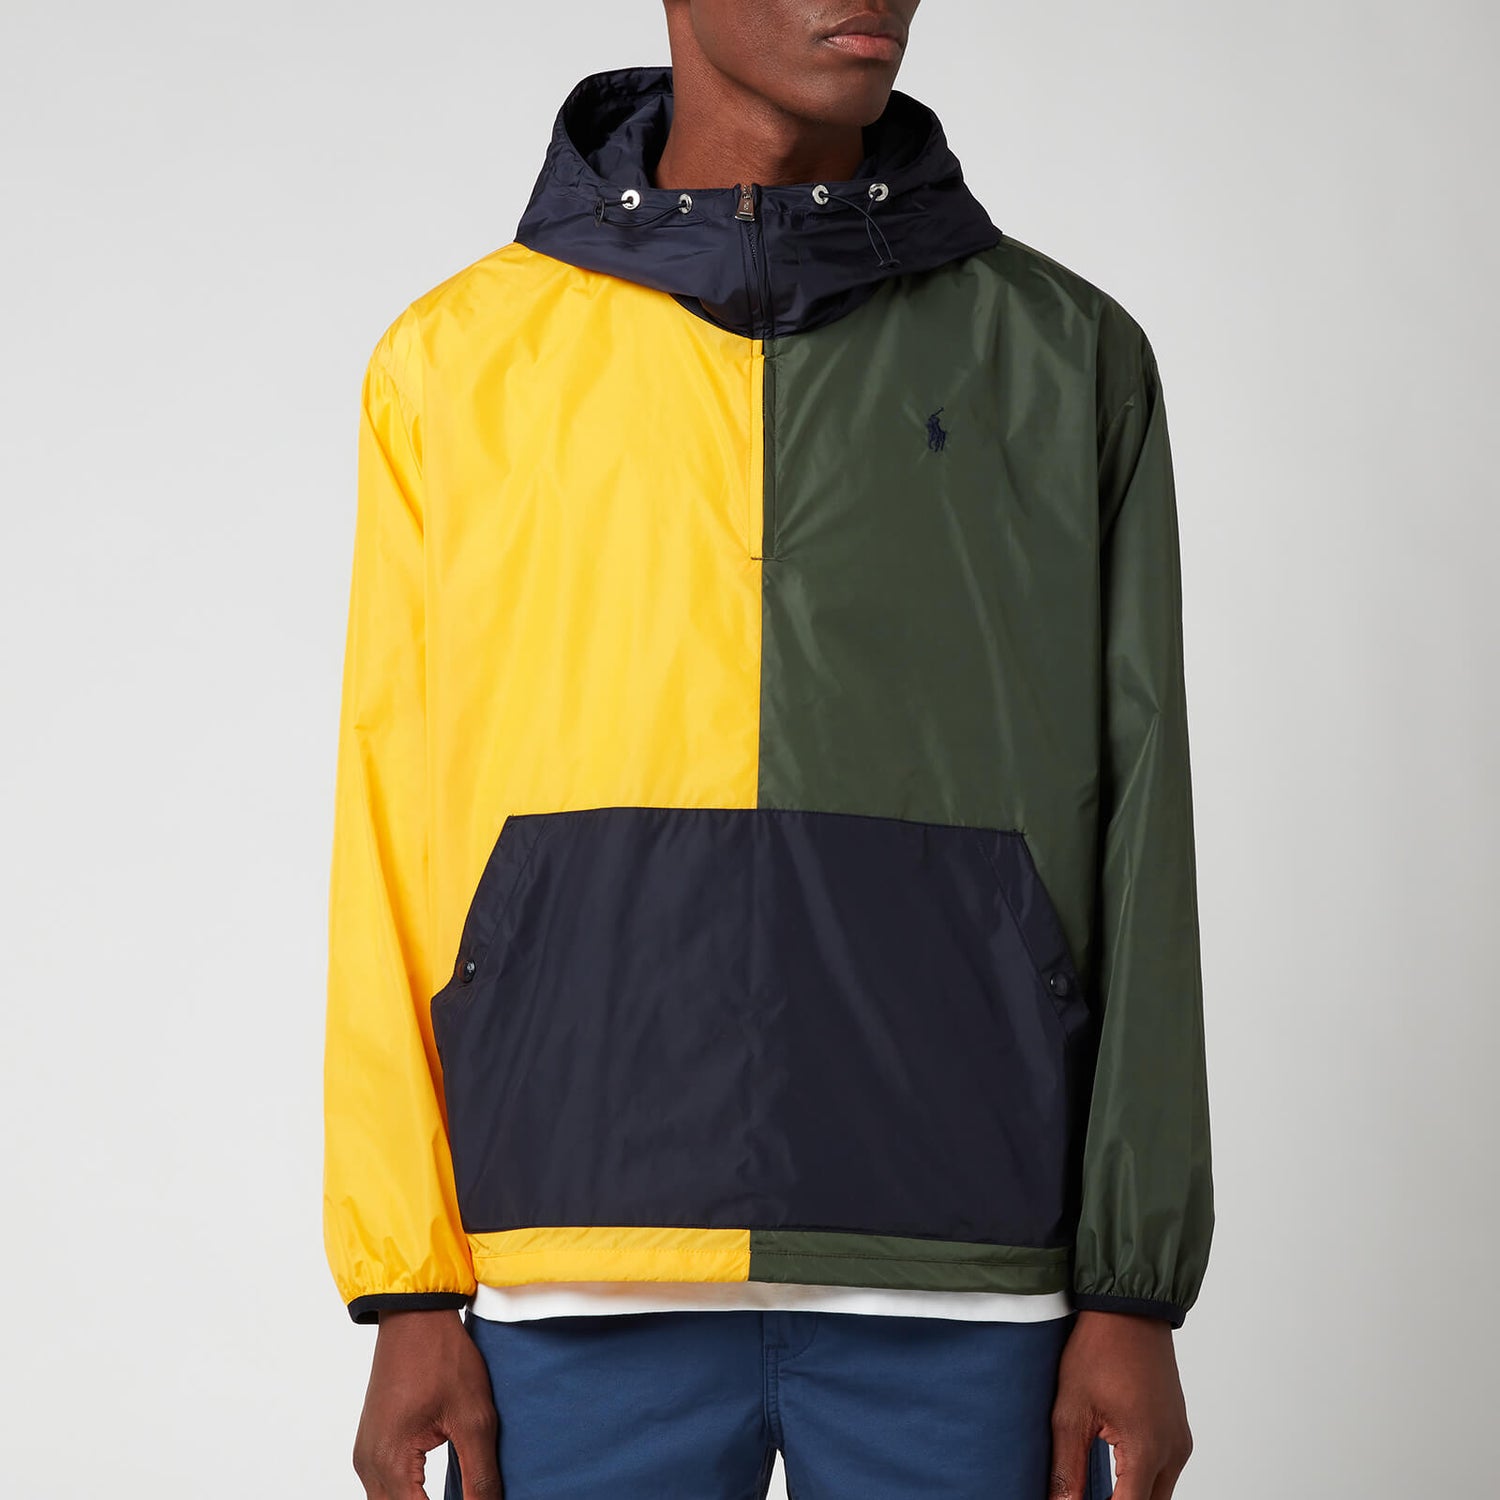 Polo Ralph Lauren Men's Eastport Pullover Jacket - Army/Slicker Yellow - XL